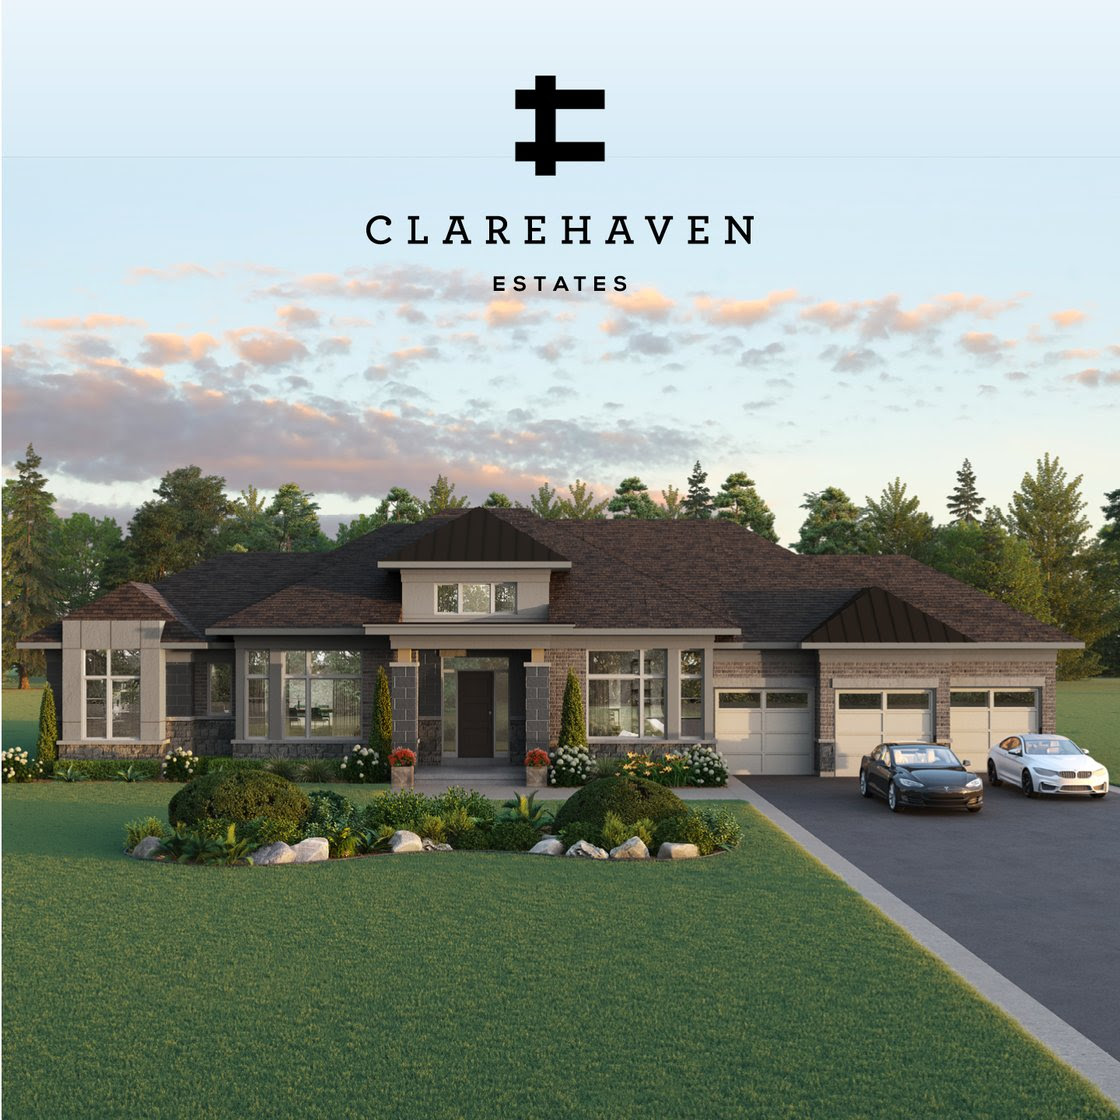 Clarehaven Estates - Exterior Elevation 1